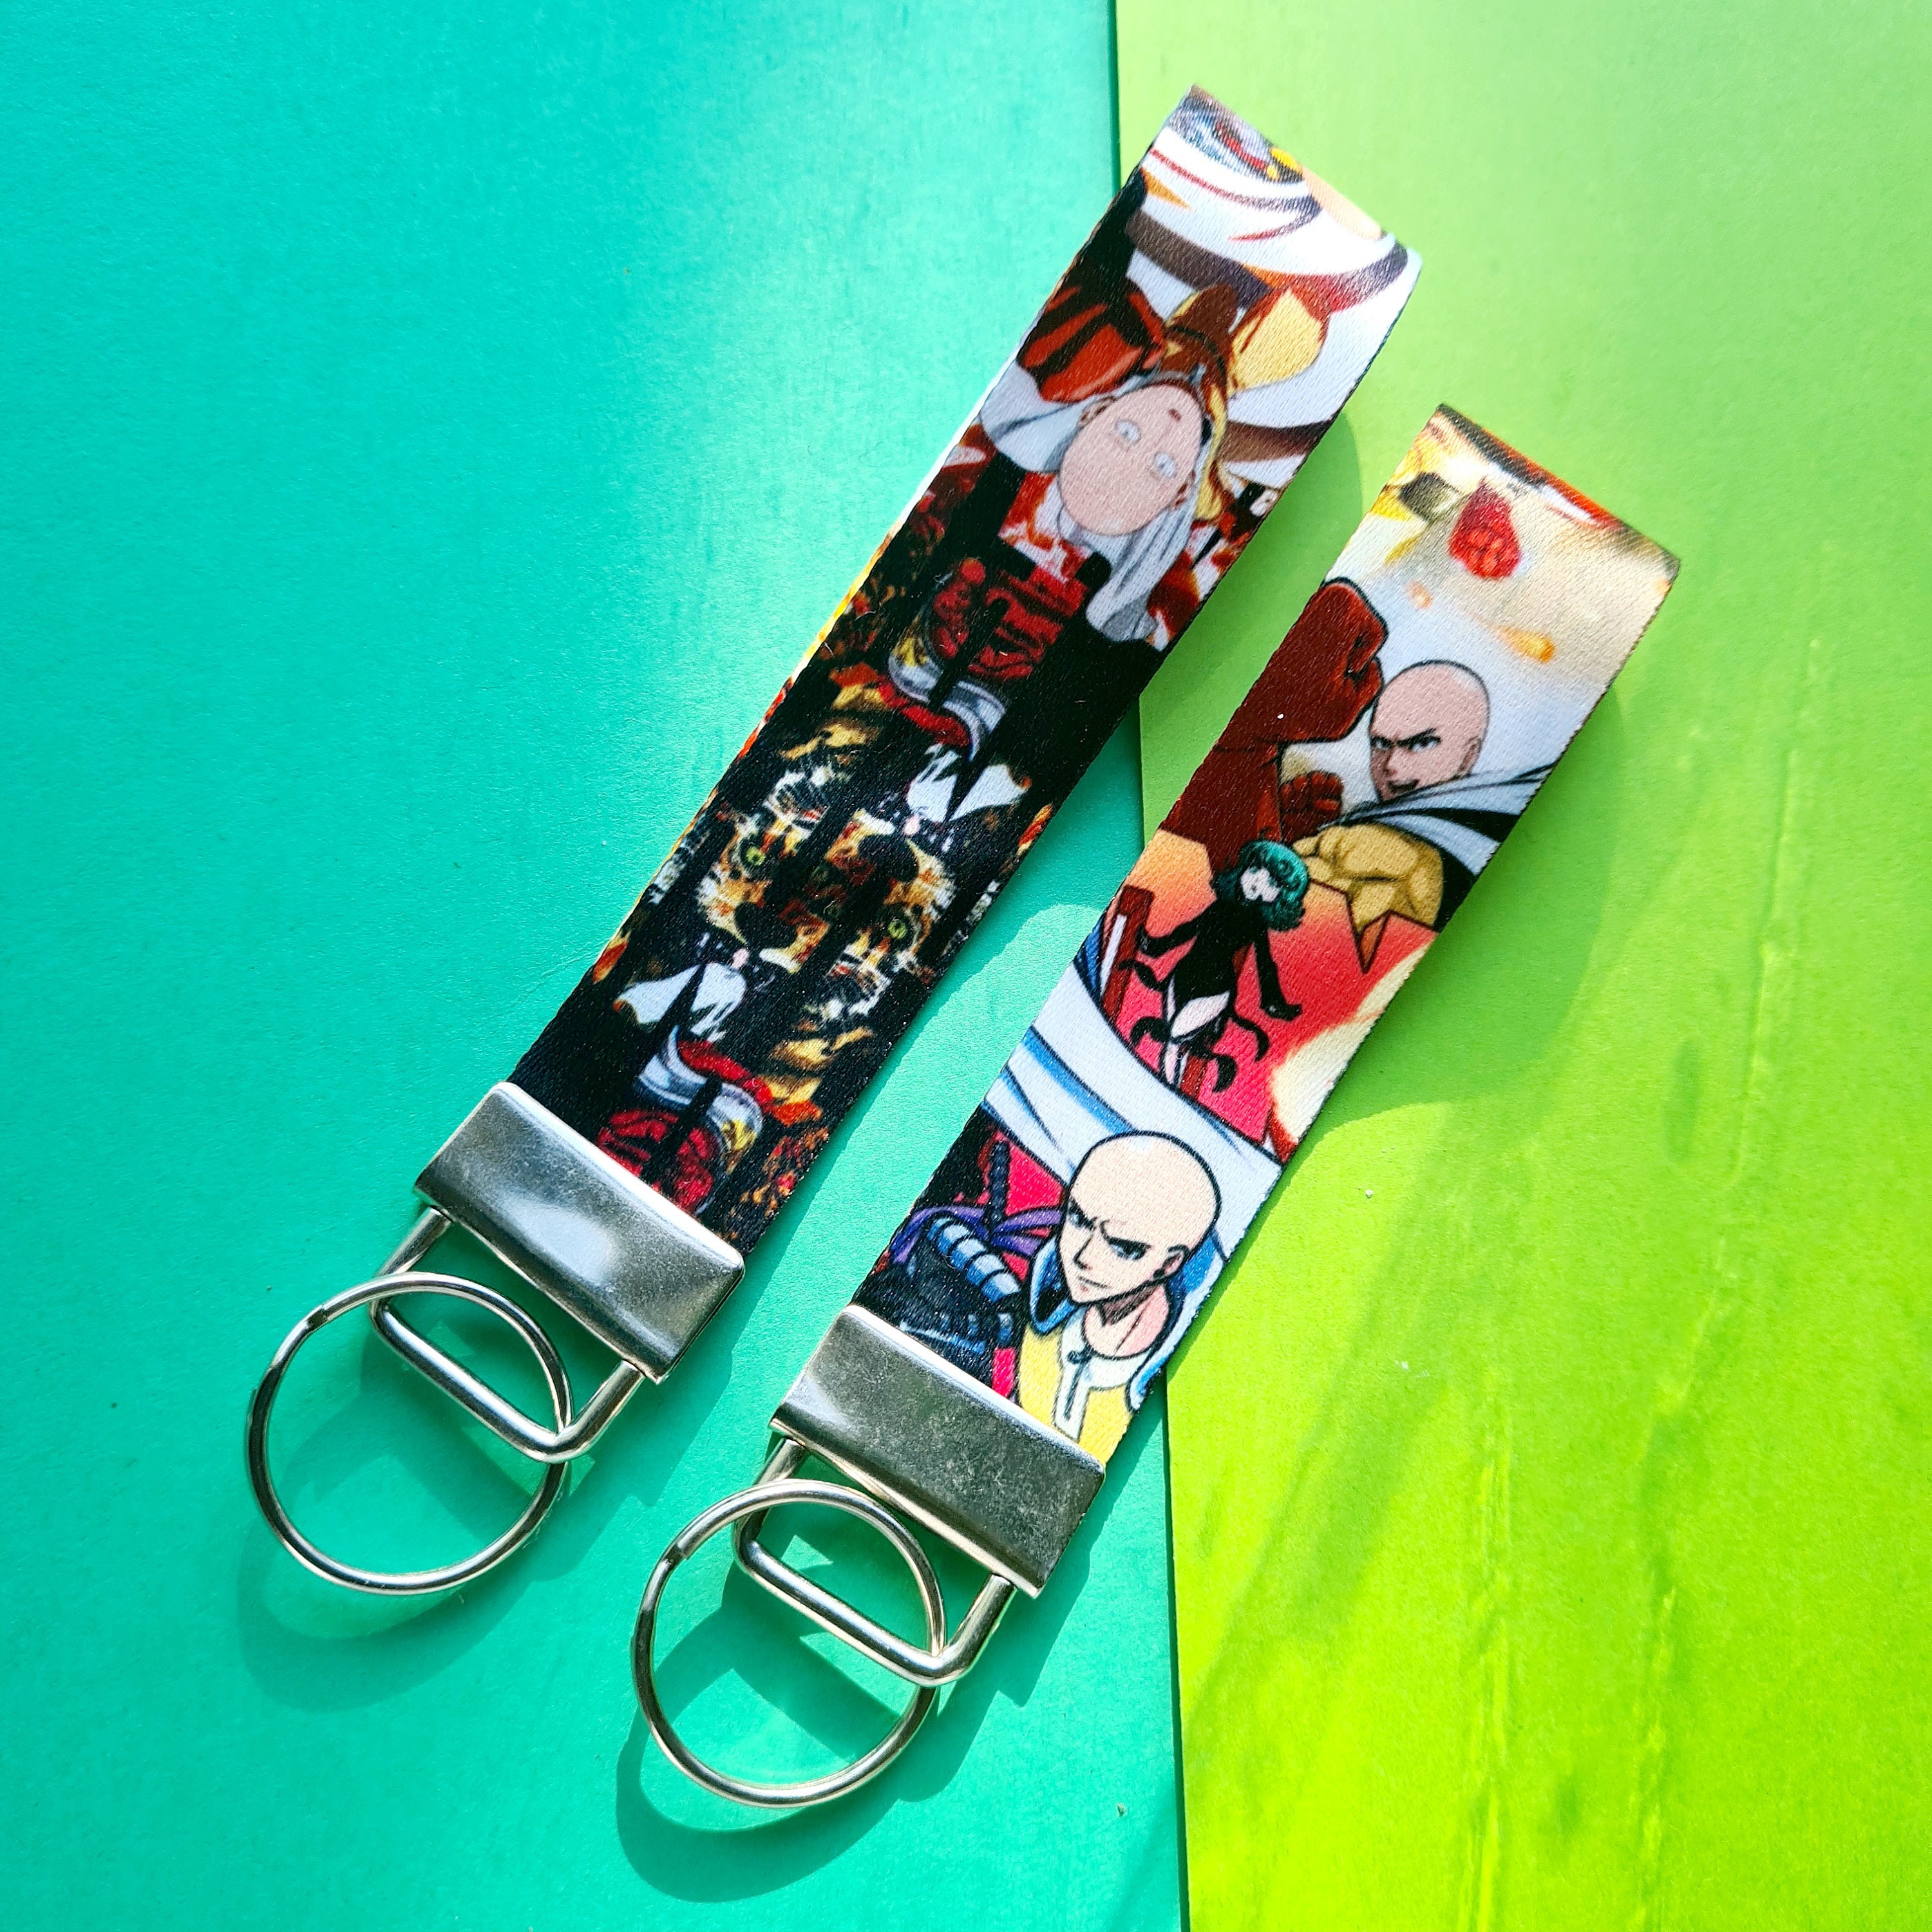 One Punch Man Manga Saitama Id Badge Holder Keychain Lanyard W/ Rubber  Pendant Multicoloured : Target